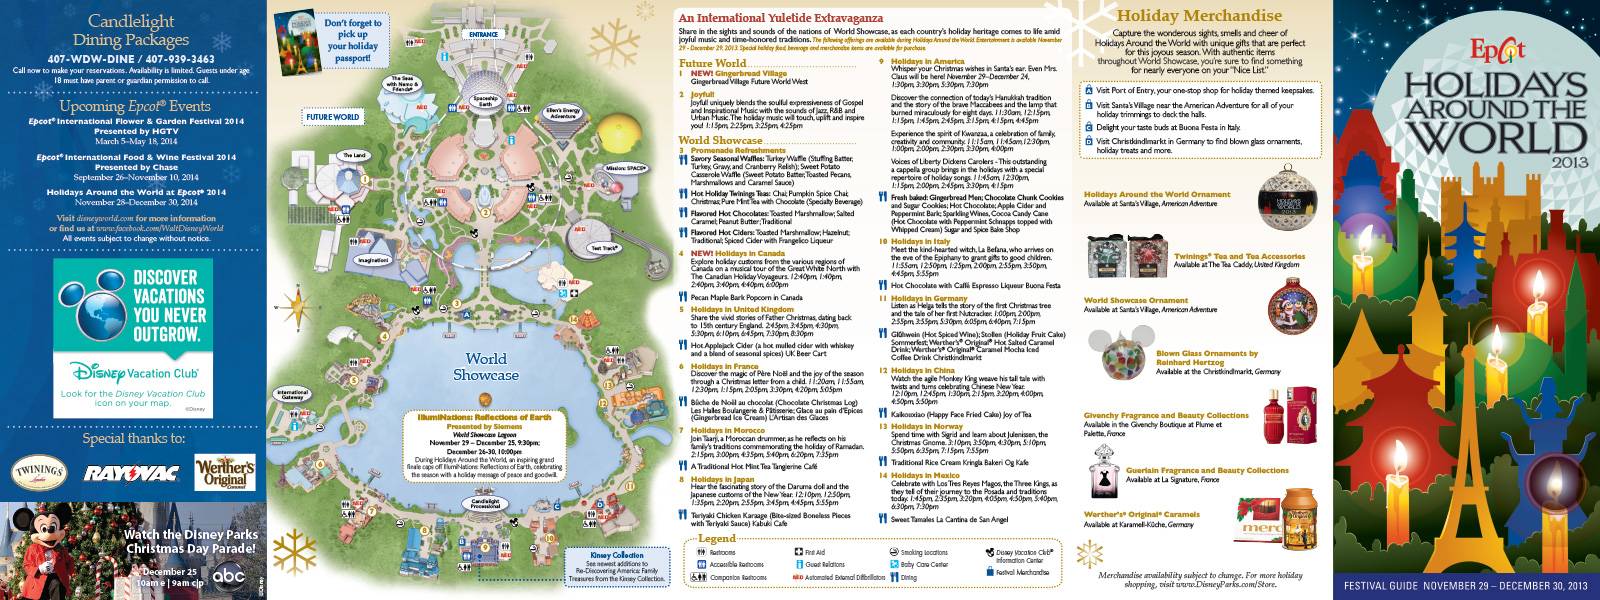 2013 Holidays Around the World guide - 1